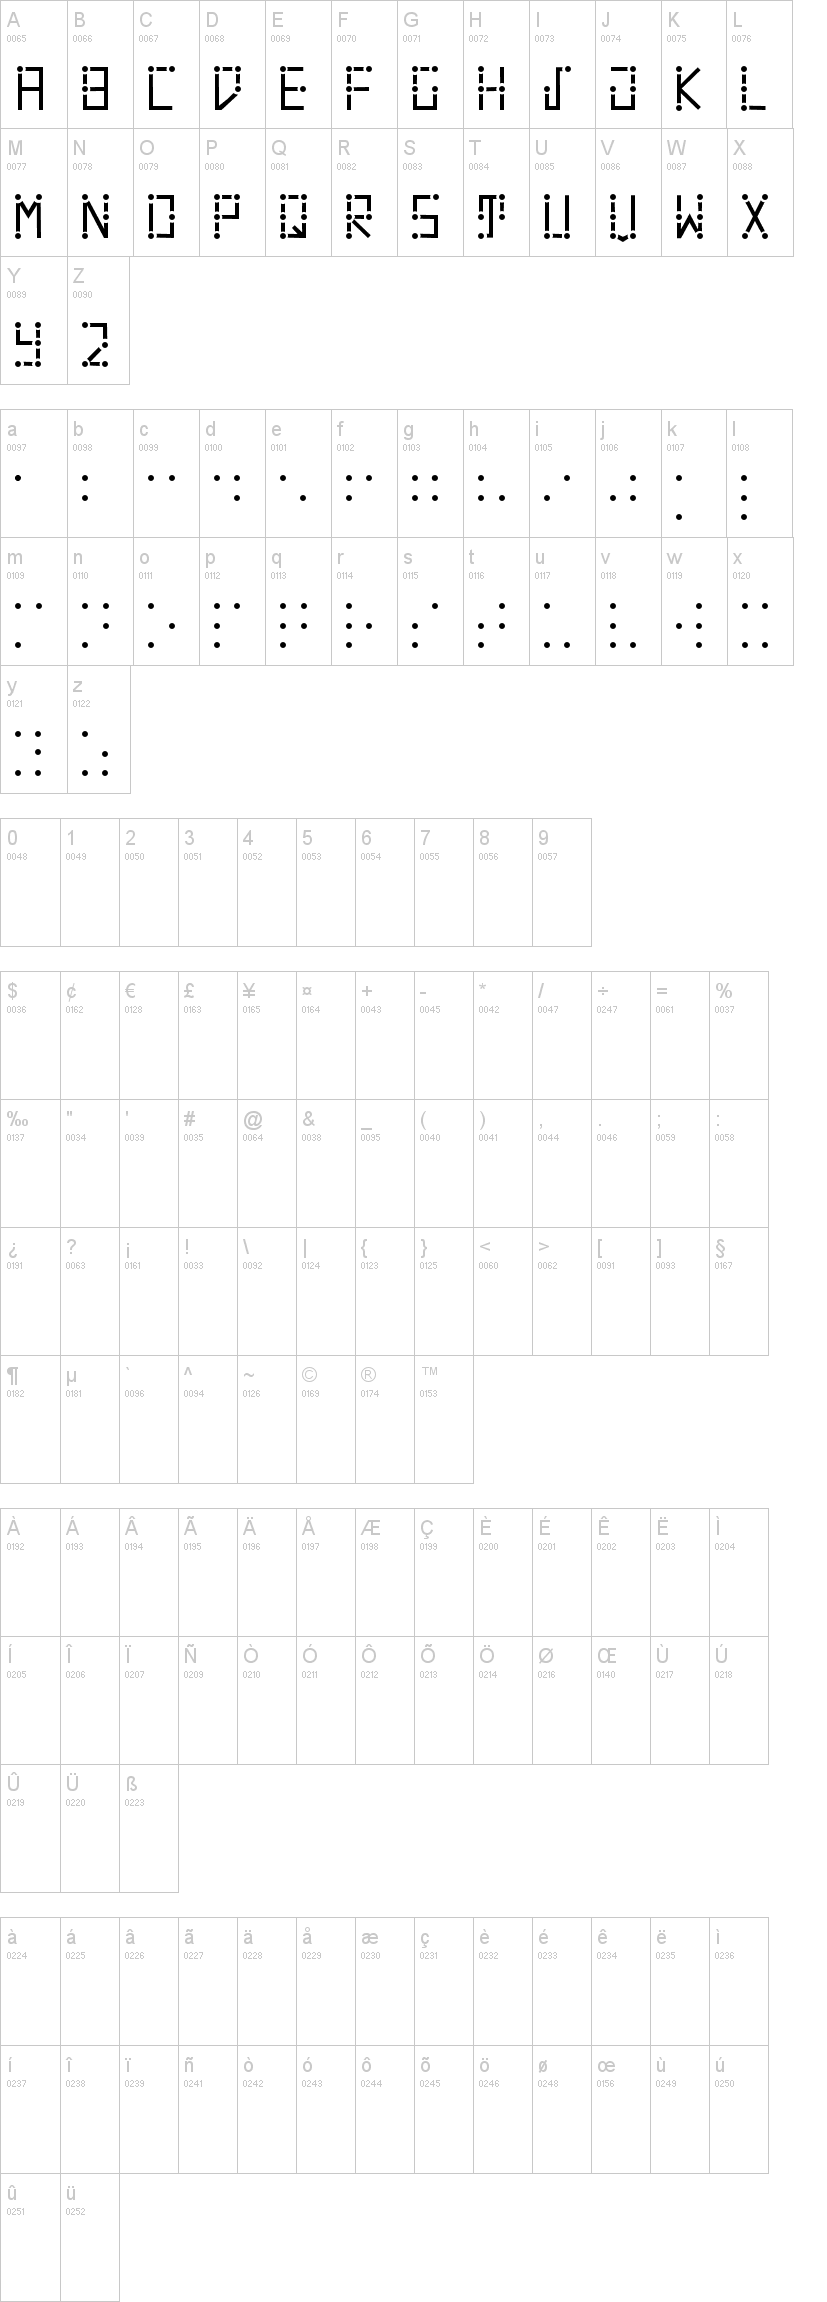 Visual Braille